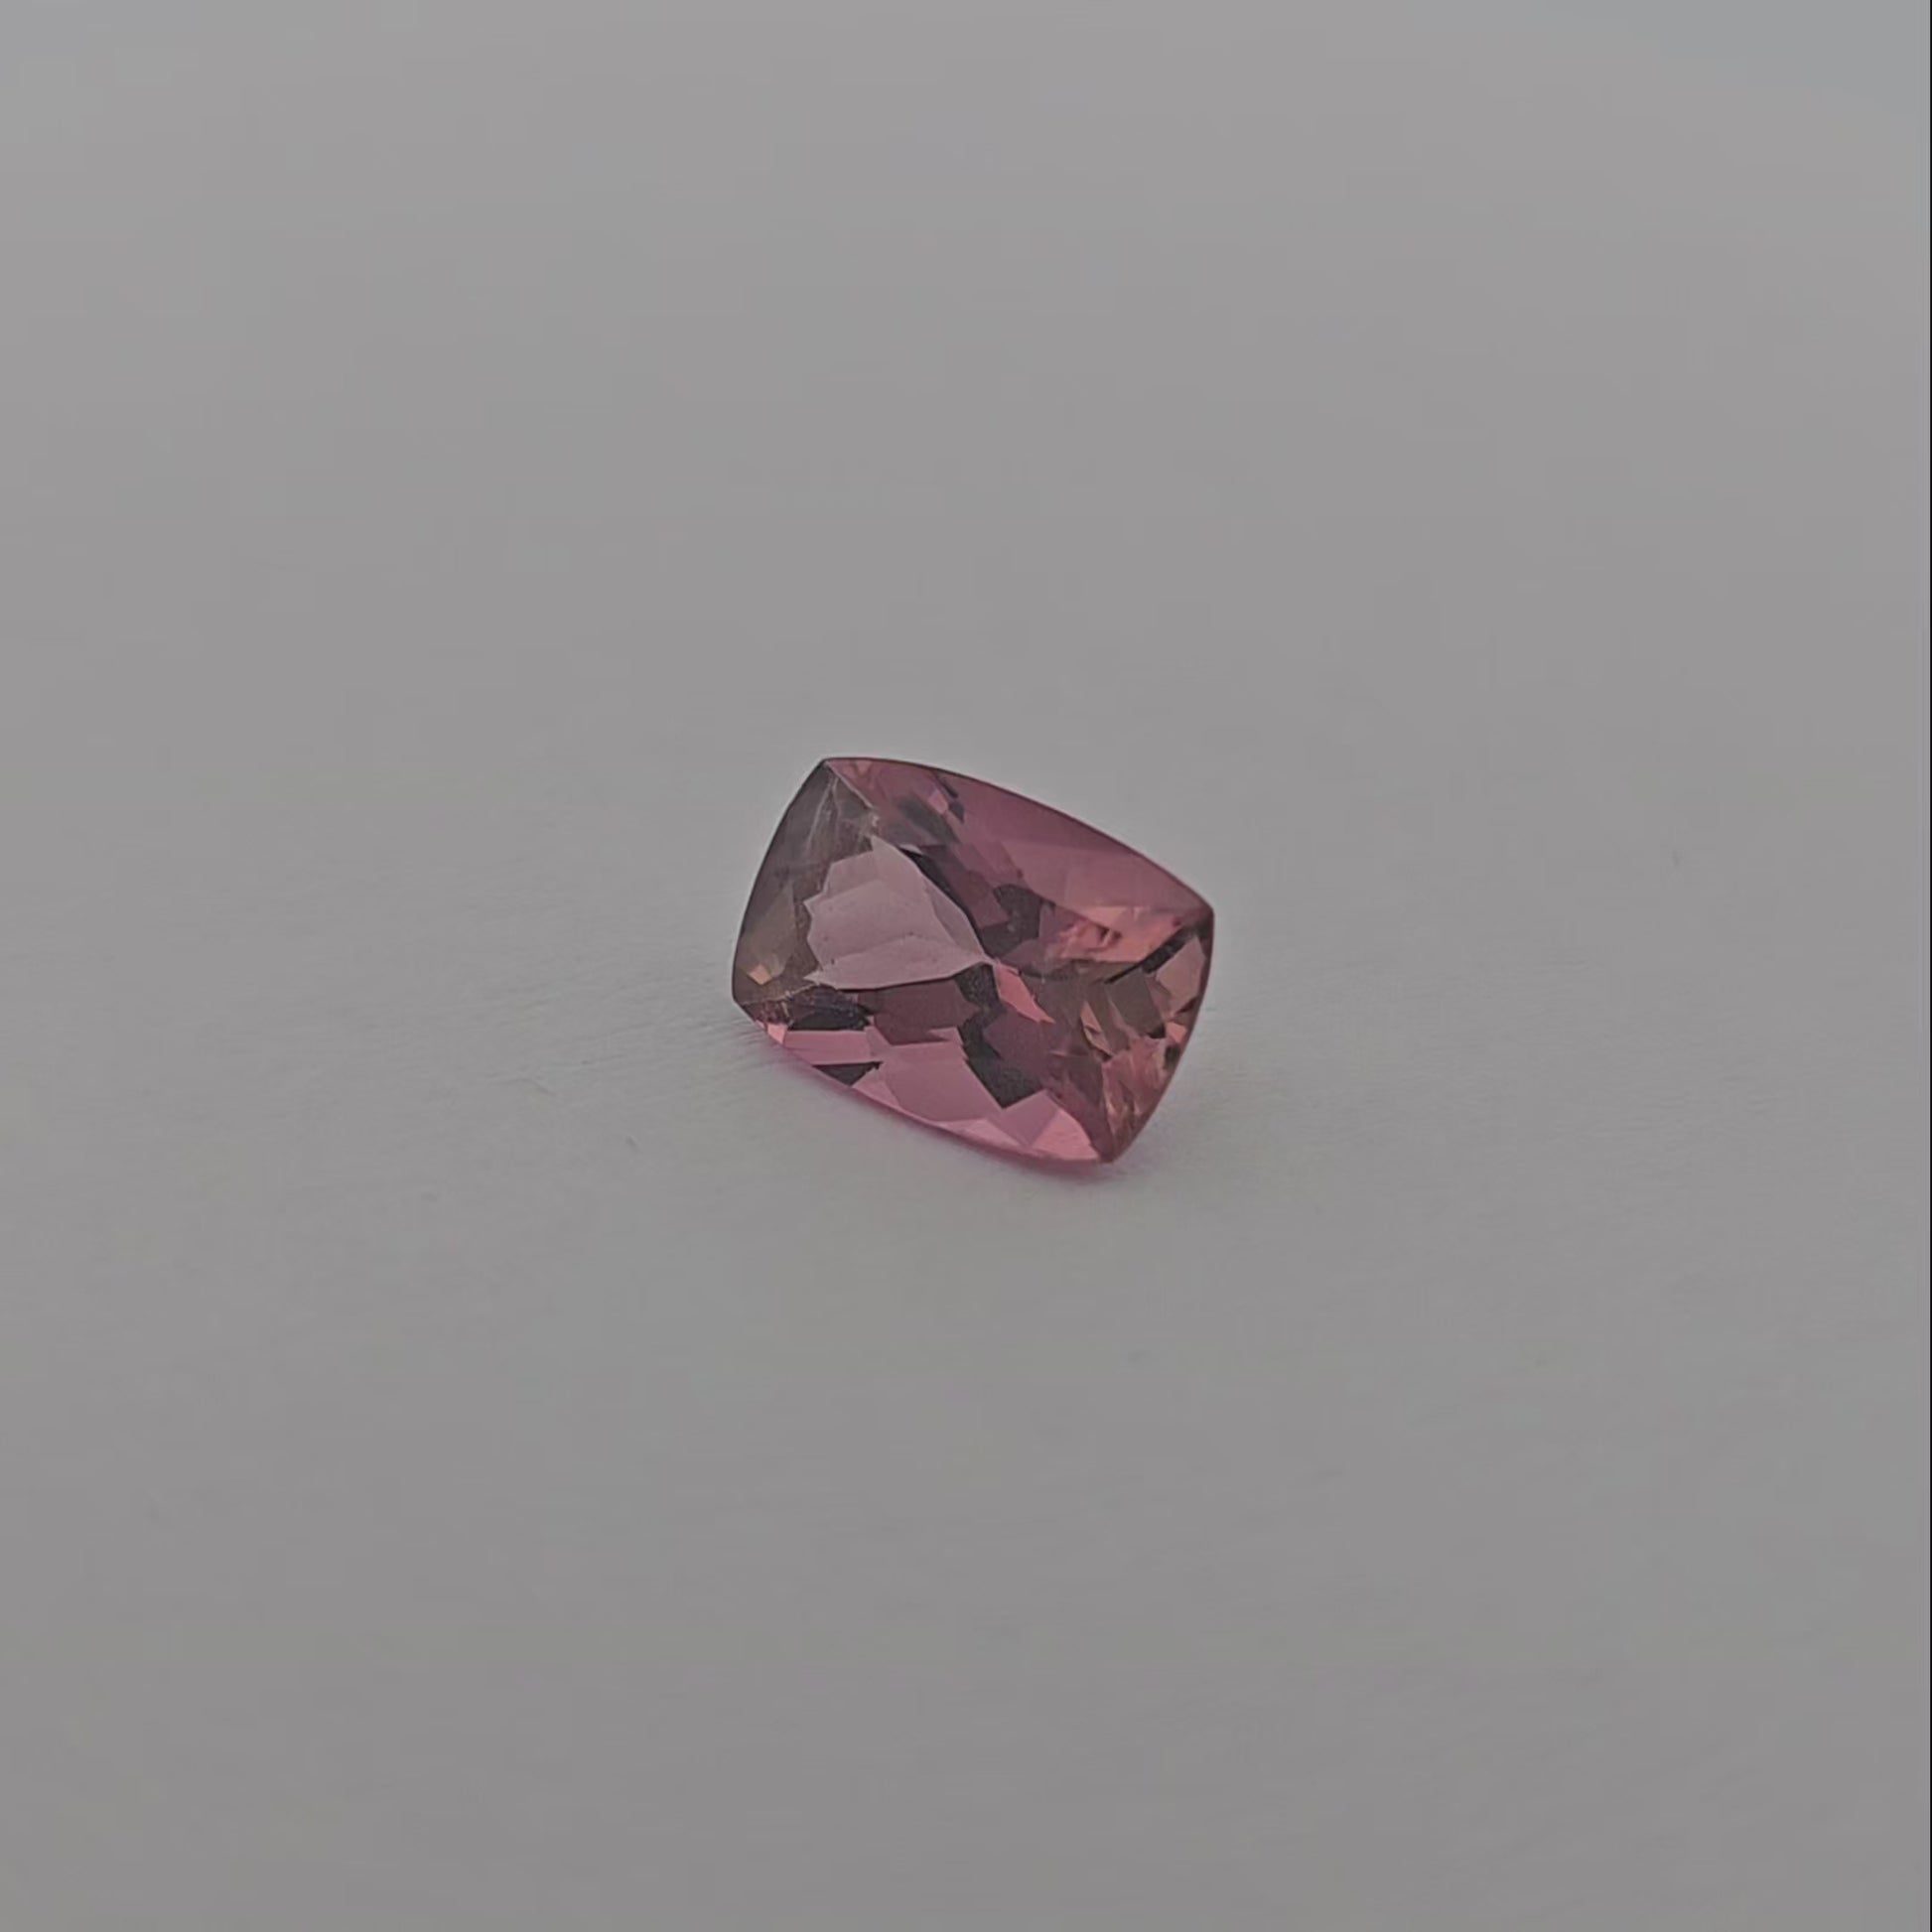 loose Natural Pink Tourmaline Stone 1.67 Carats Cushion Cut (9x6.5 mm)